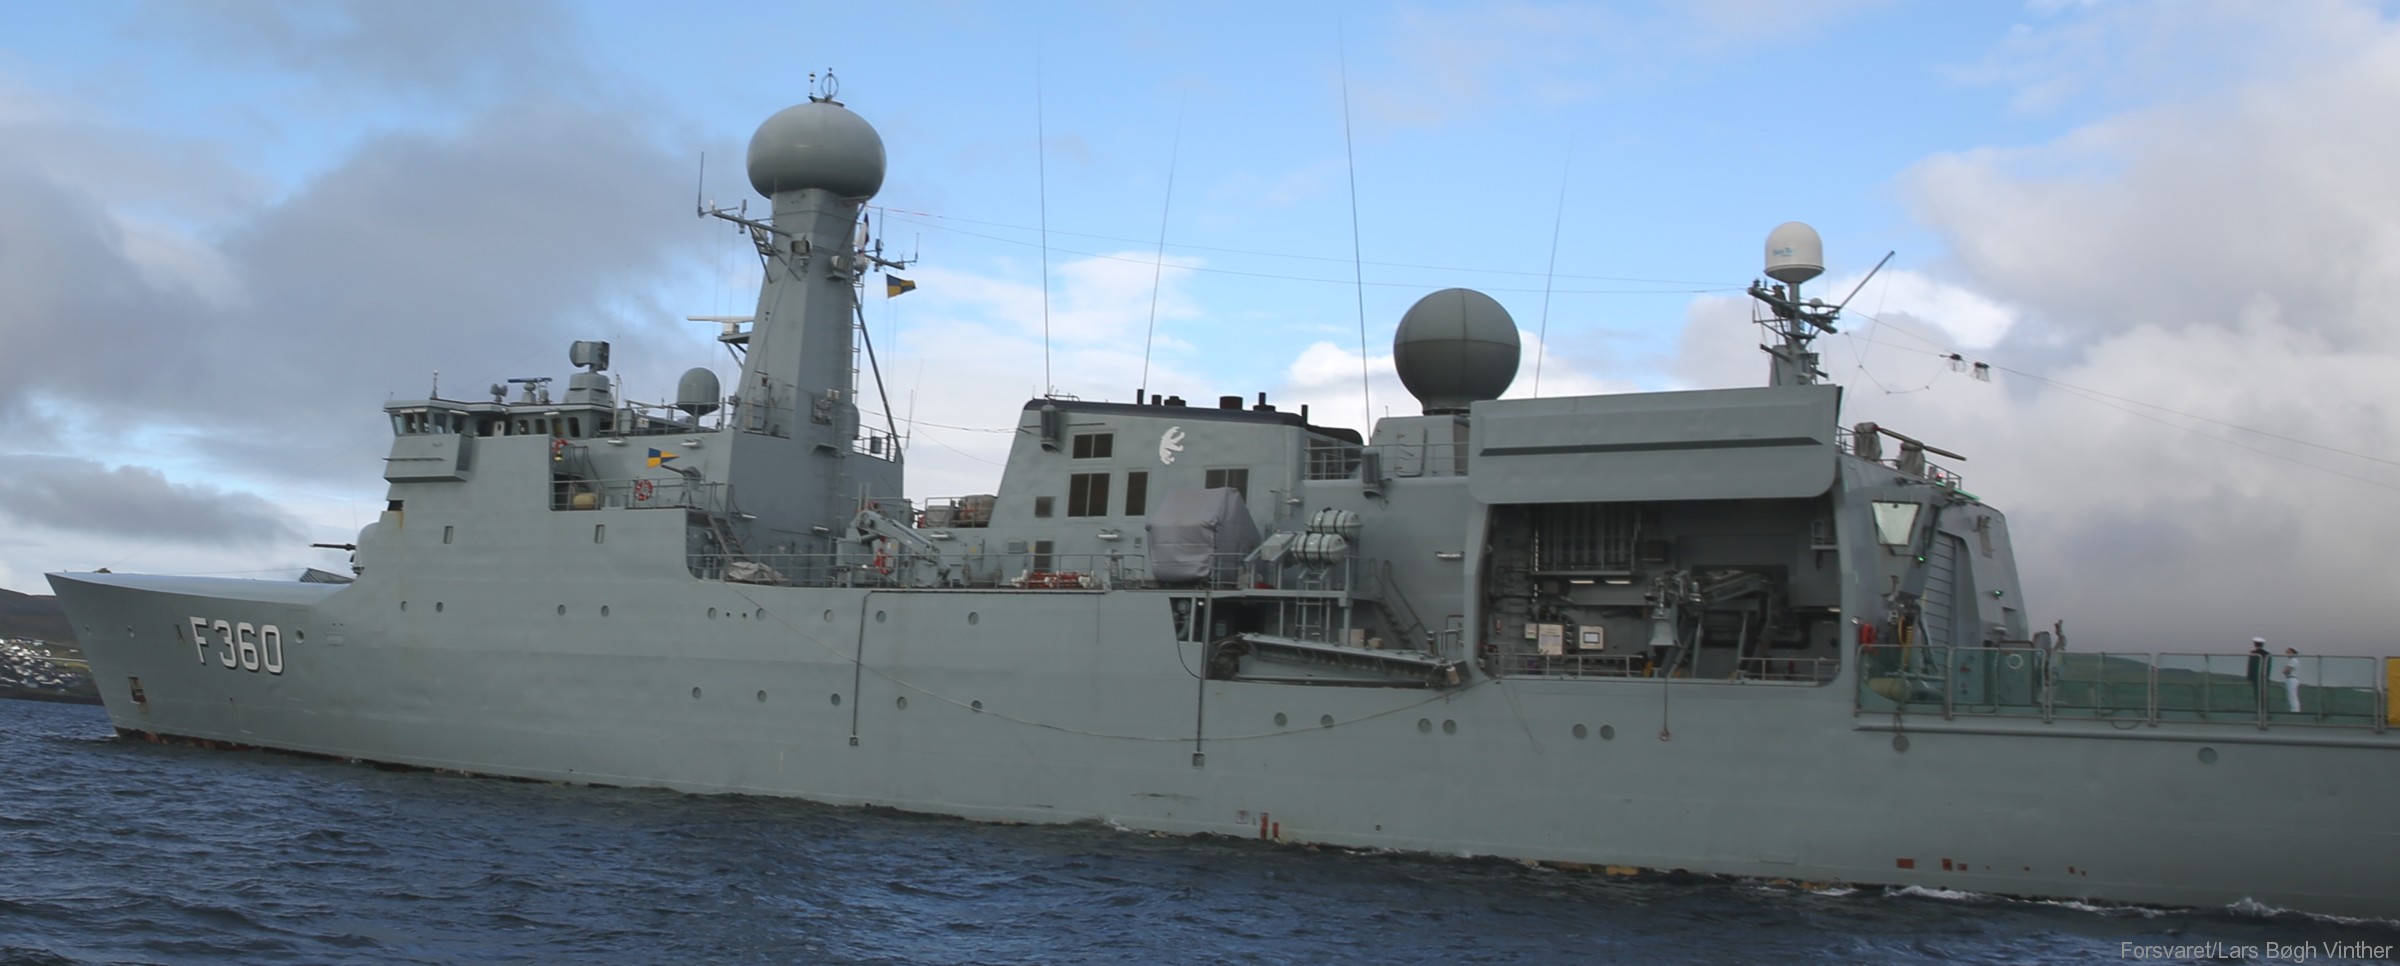 f-360 hdms hvidbjornen thetis class ocean patrol frigate royal danish navy kongelige danske marine kdm inspektionsskibet 06